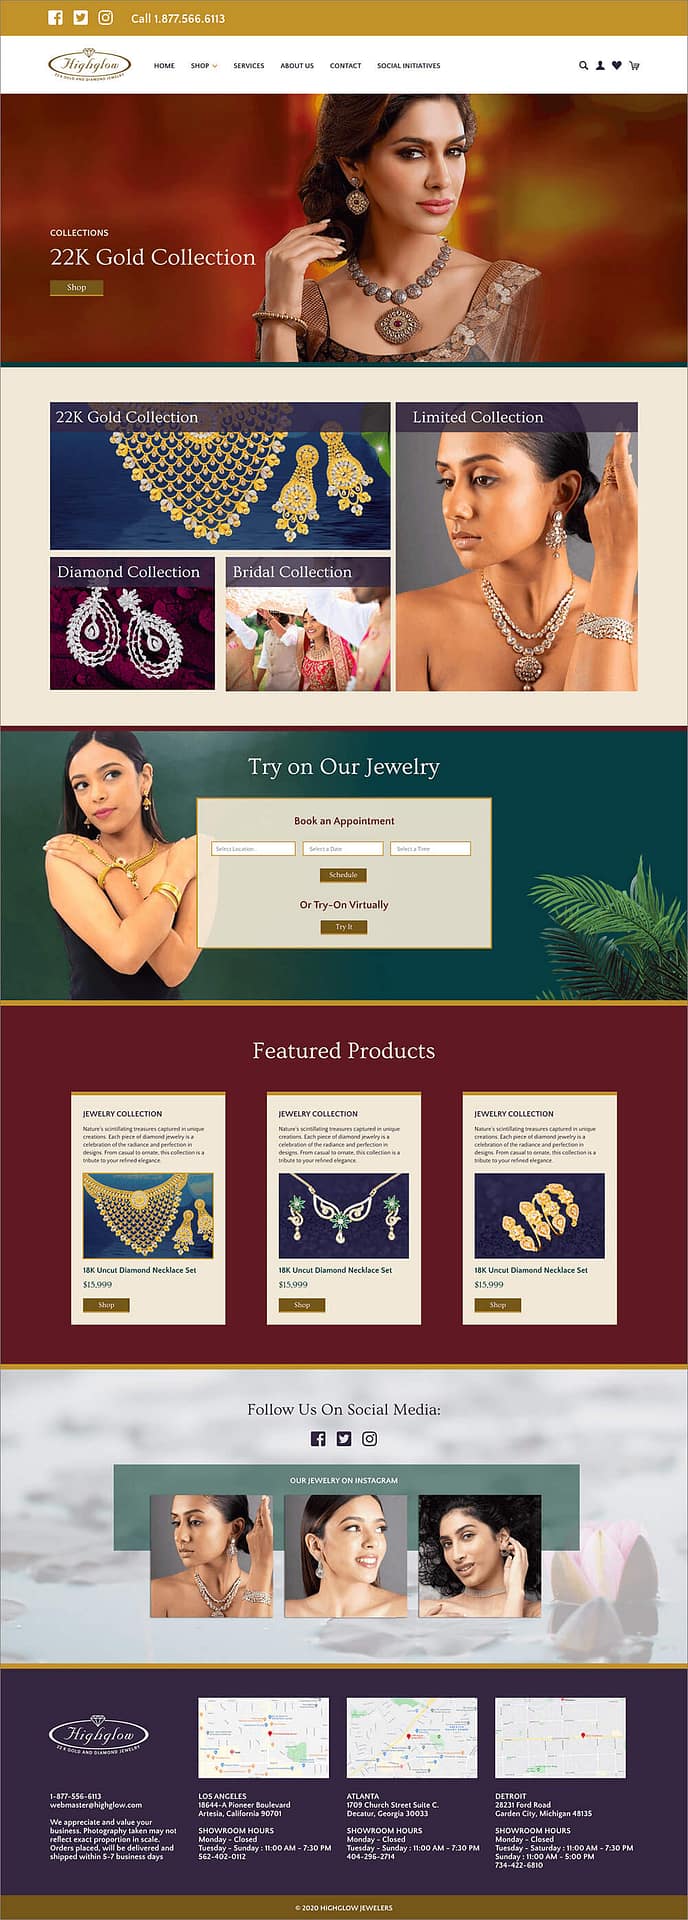 Highglow Jewelers Shopify Homepage Design